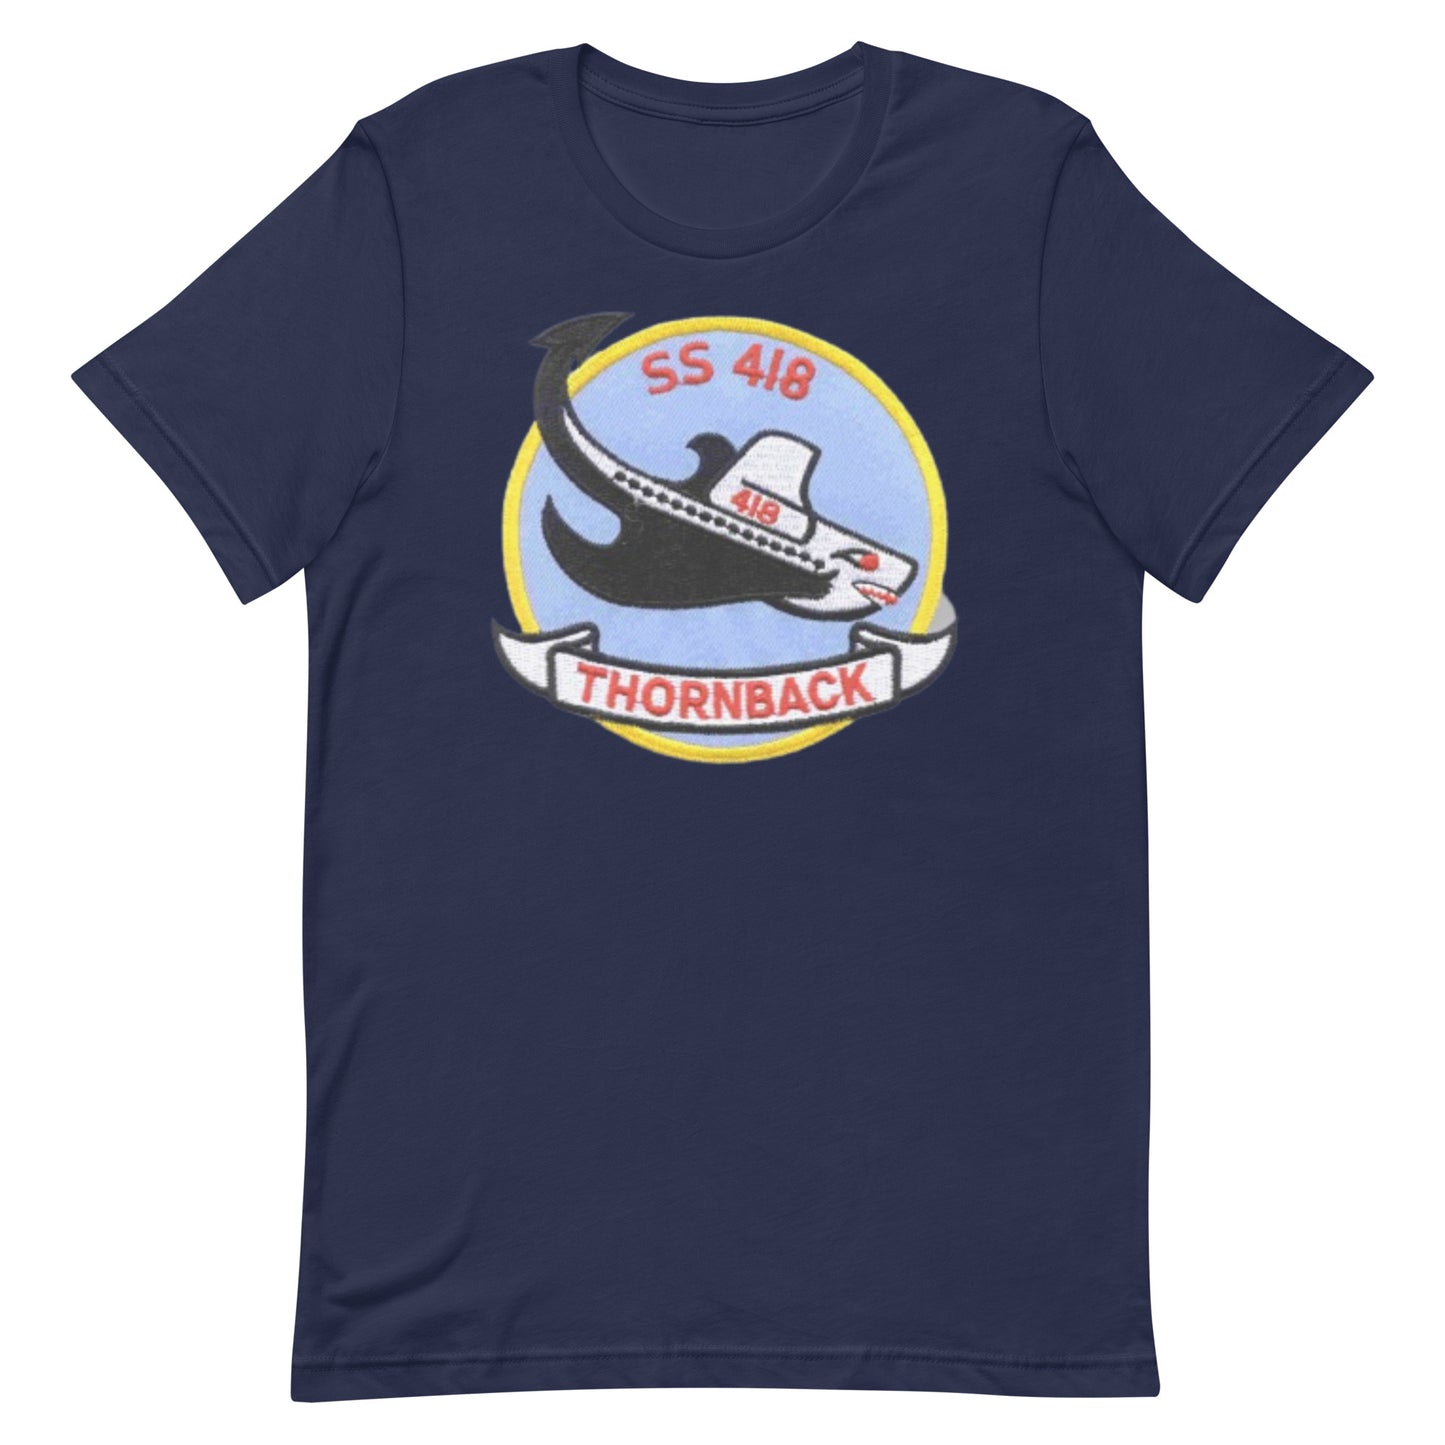 S.S. 418 Thornback NAVY Tribute Series T-Shirt